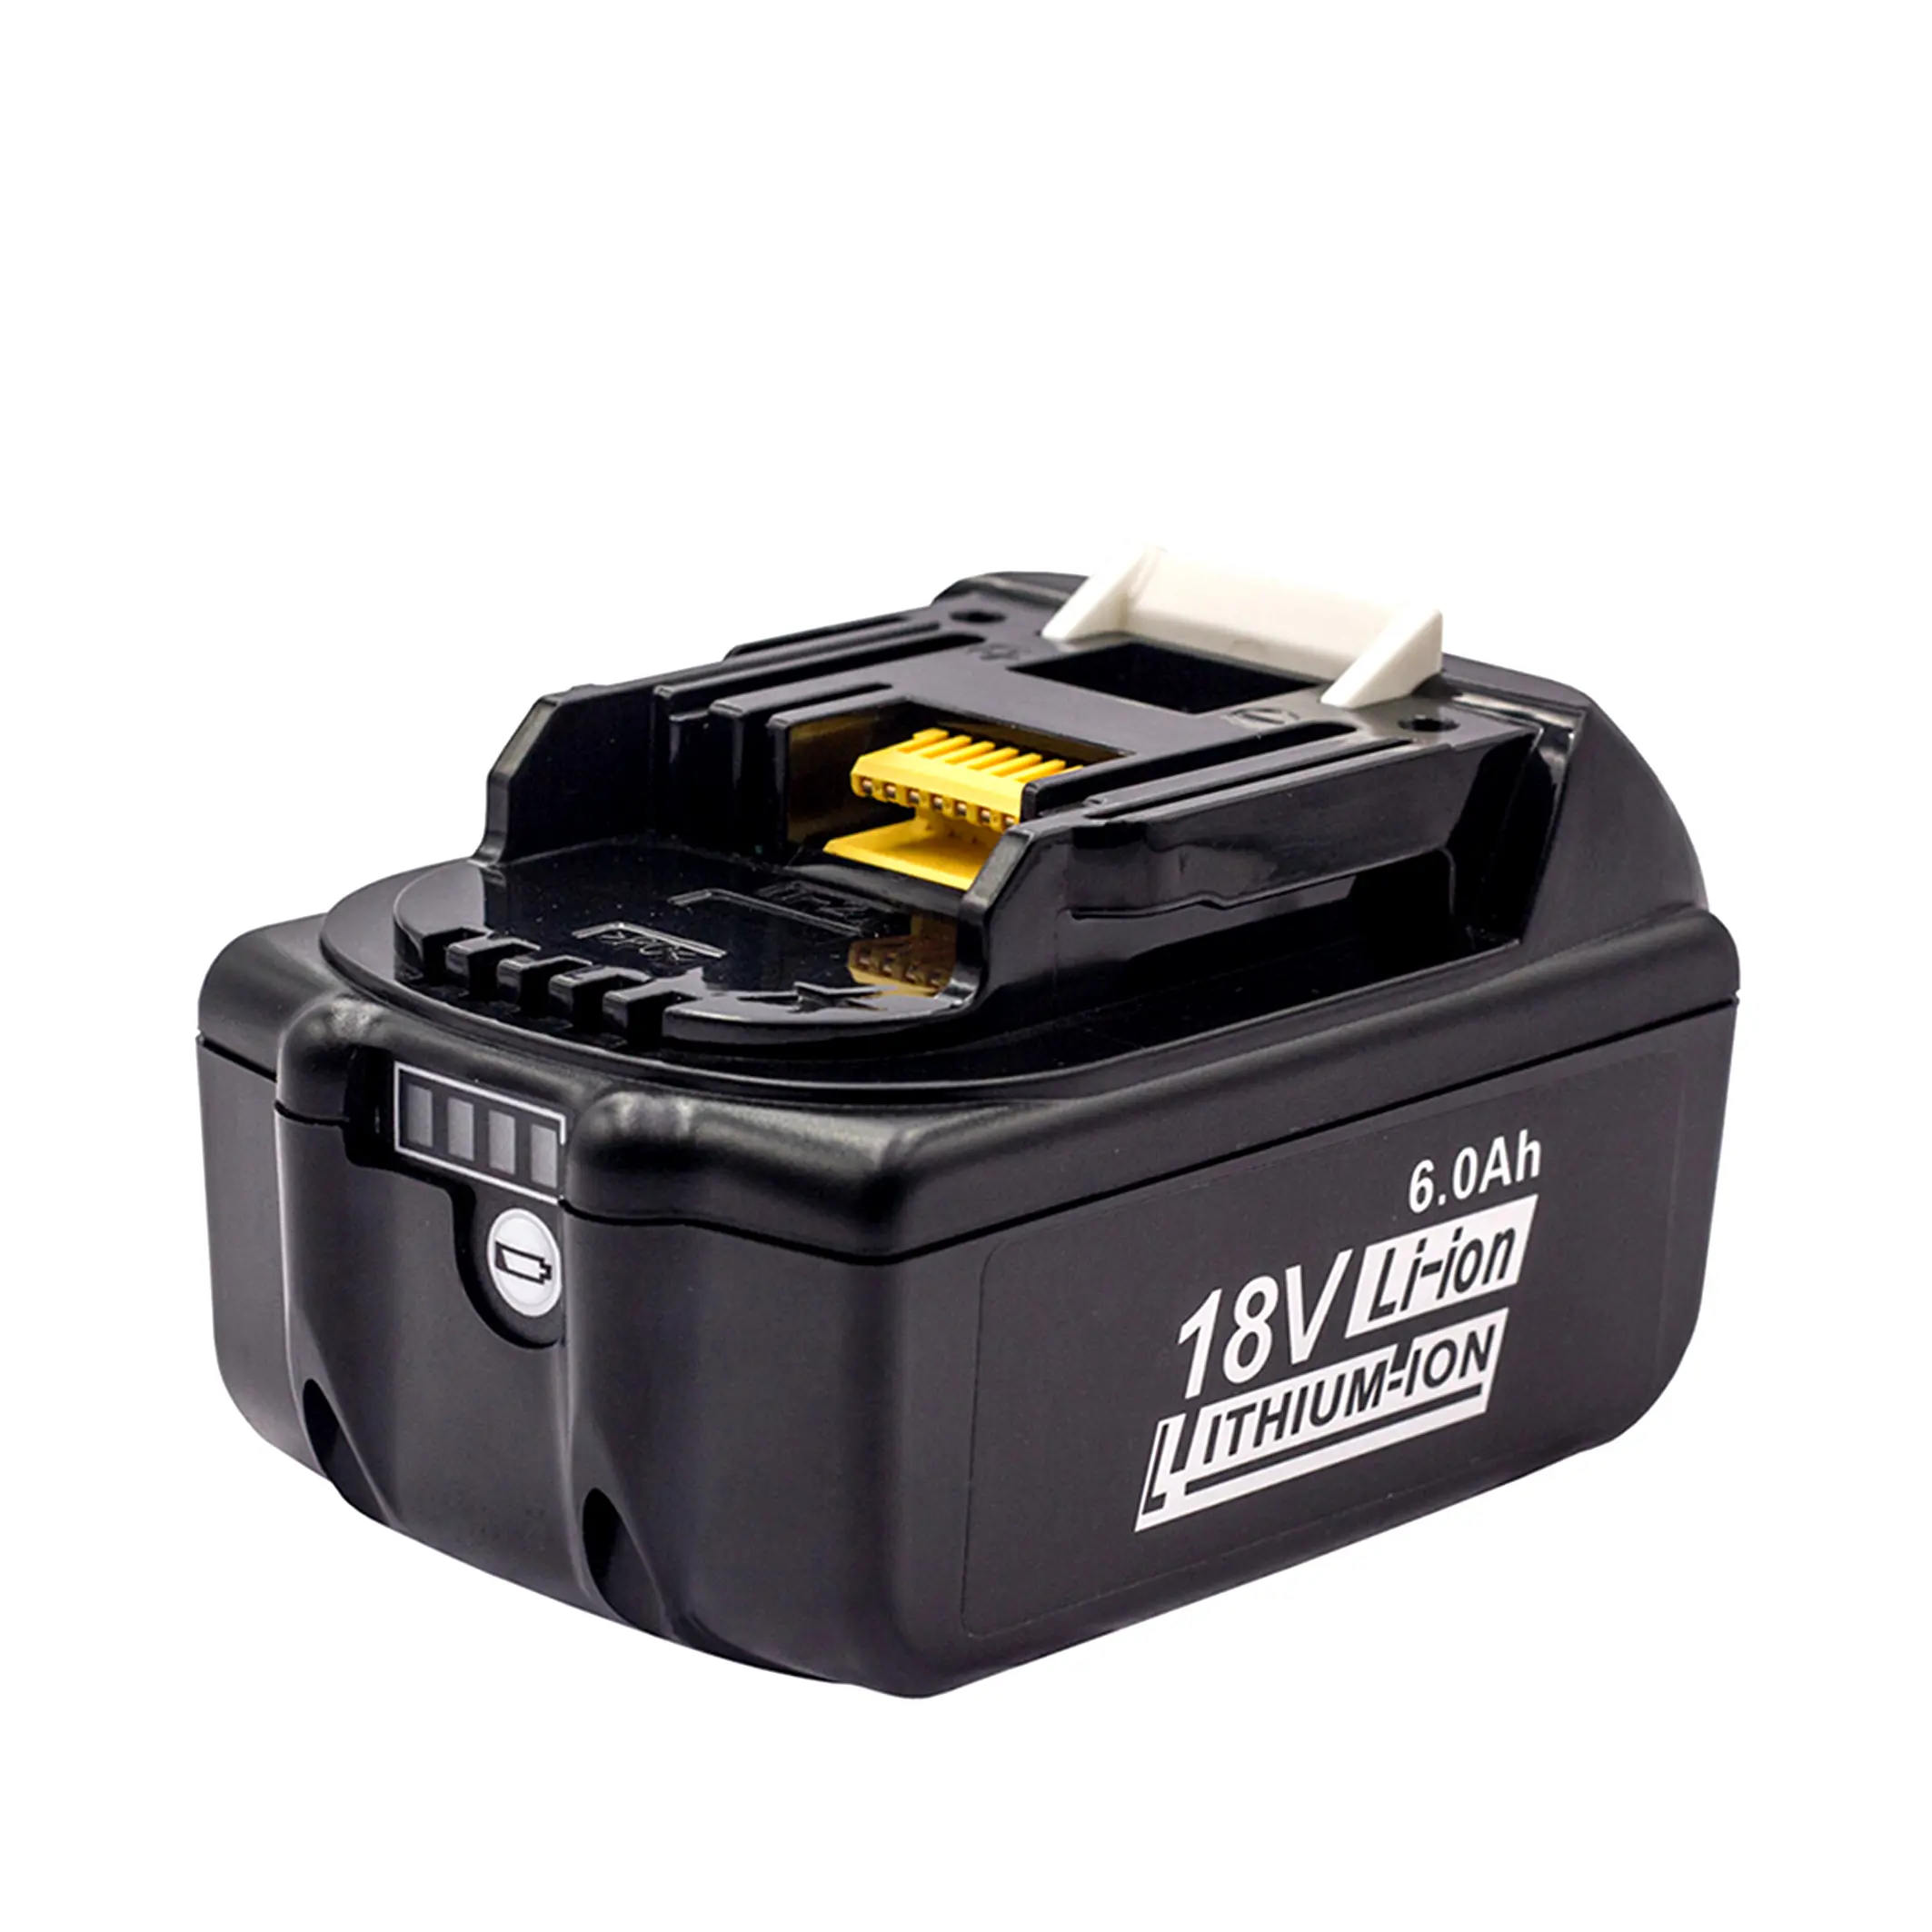 Amazon Hot Sale Li ion power tool battery 18v 6ah lithium battery for tool bl1860 bl1850 bl1840 battery 18v makita